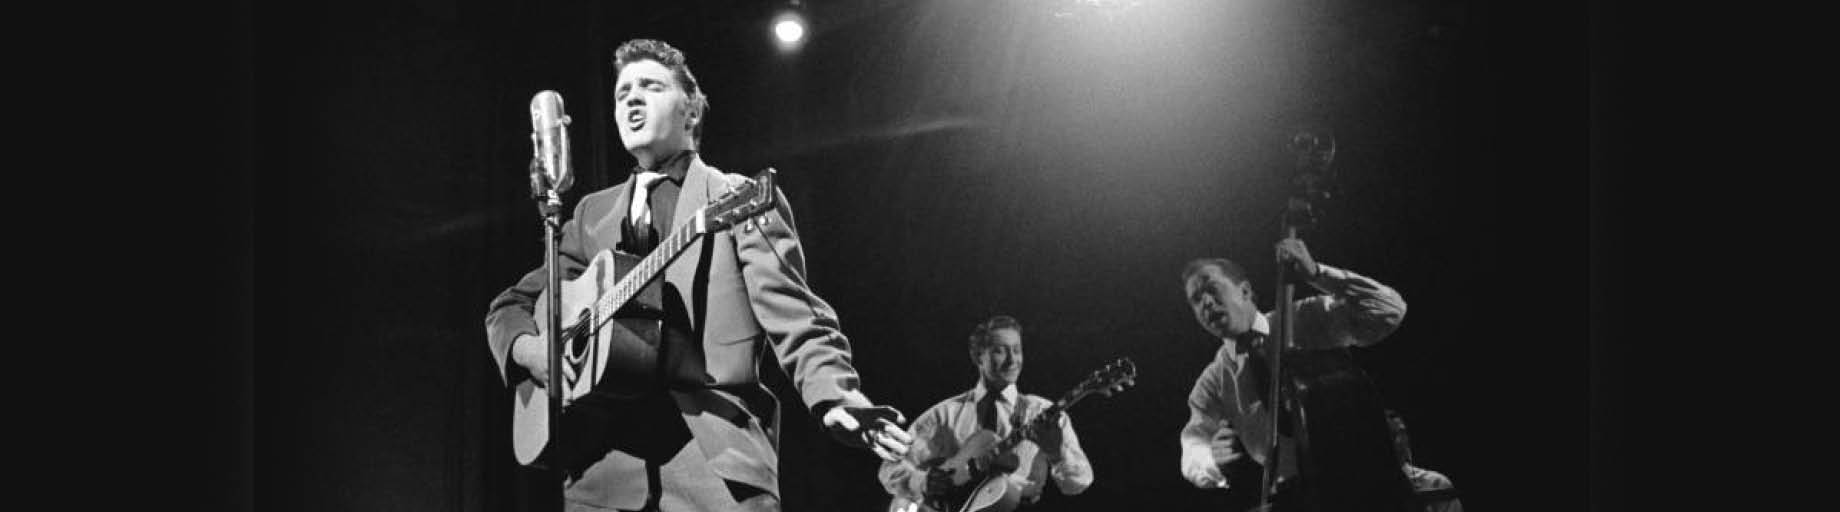 Elvis Presley Tour of the USA with Jim Porter